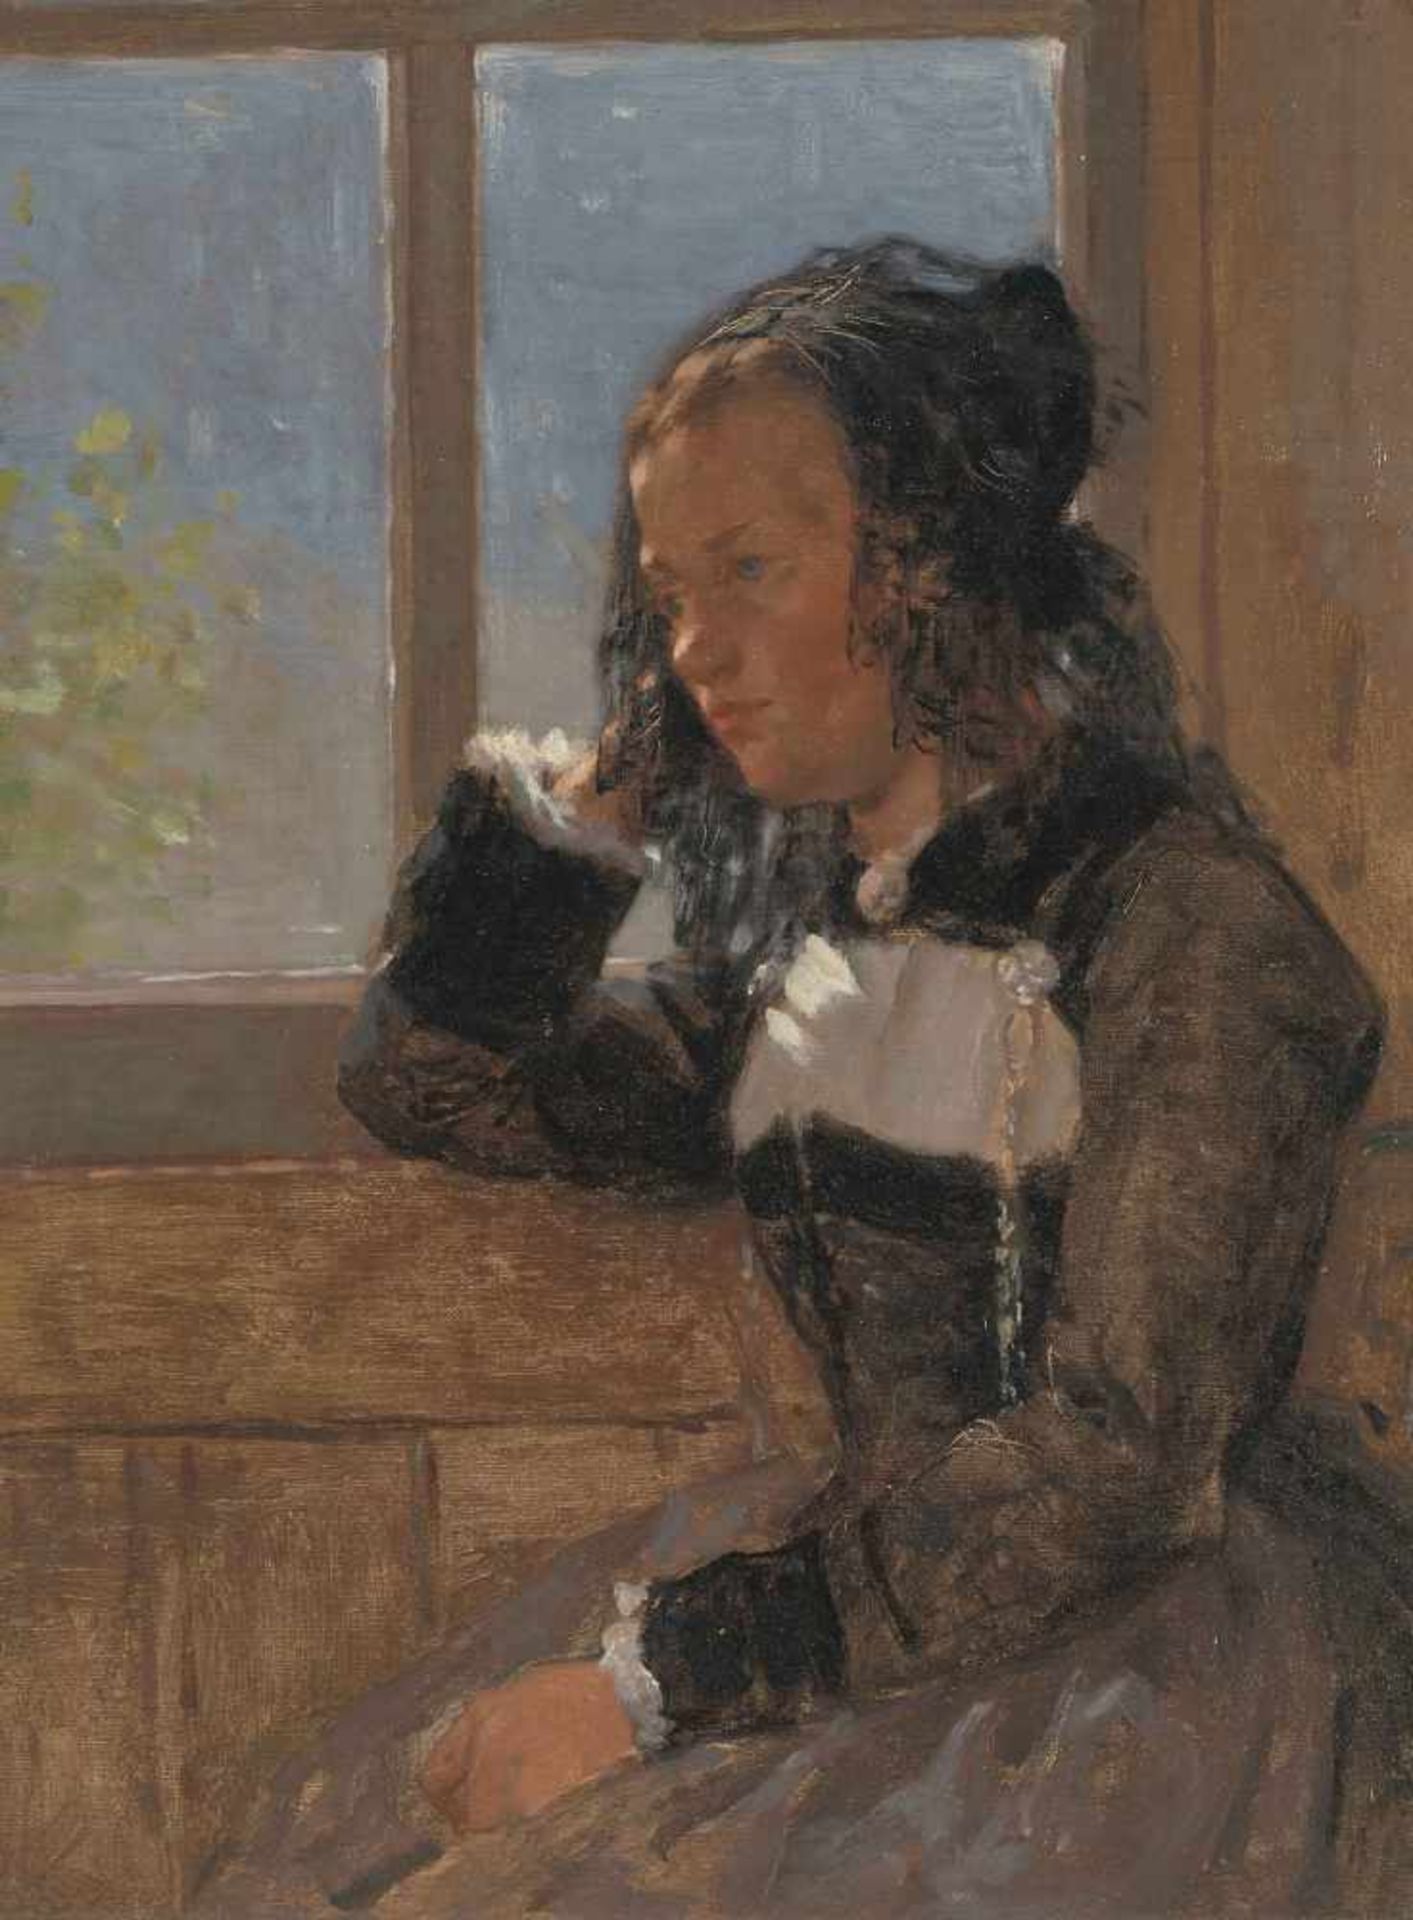 Baud-Bovy, Auguste(Genf 1848–1899 Davos)"Jeune fille en costume bernois", 1886. Ölstudie auf